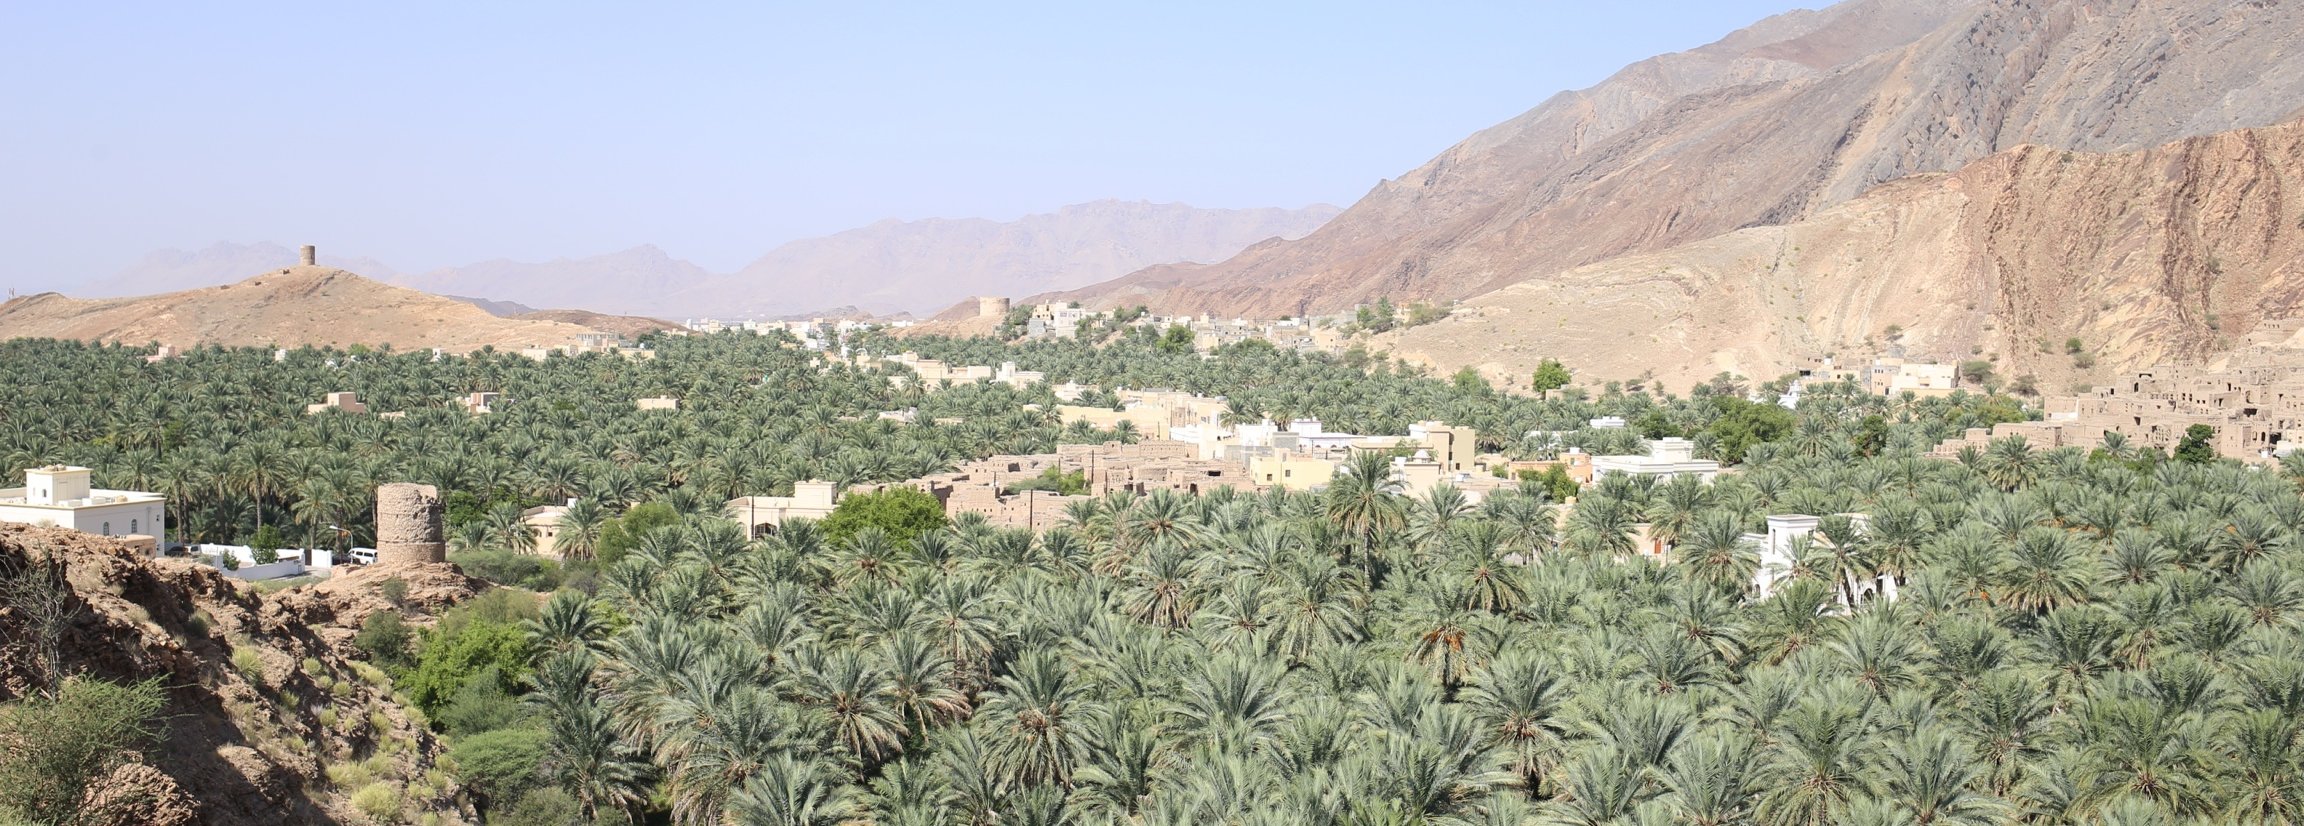 Oman mit Kindern individuell - Oman for family individuell Familienabenteuer Wüste & Berge - Blick auf Oasen im Oman